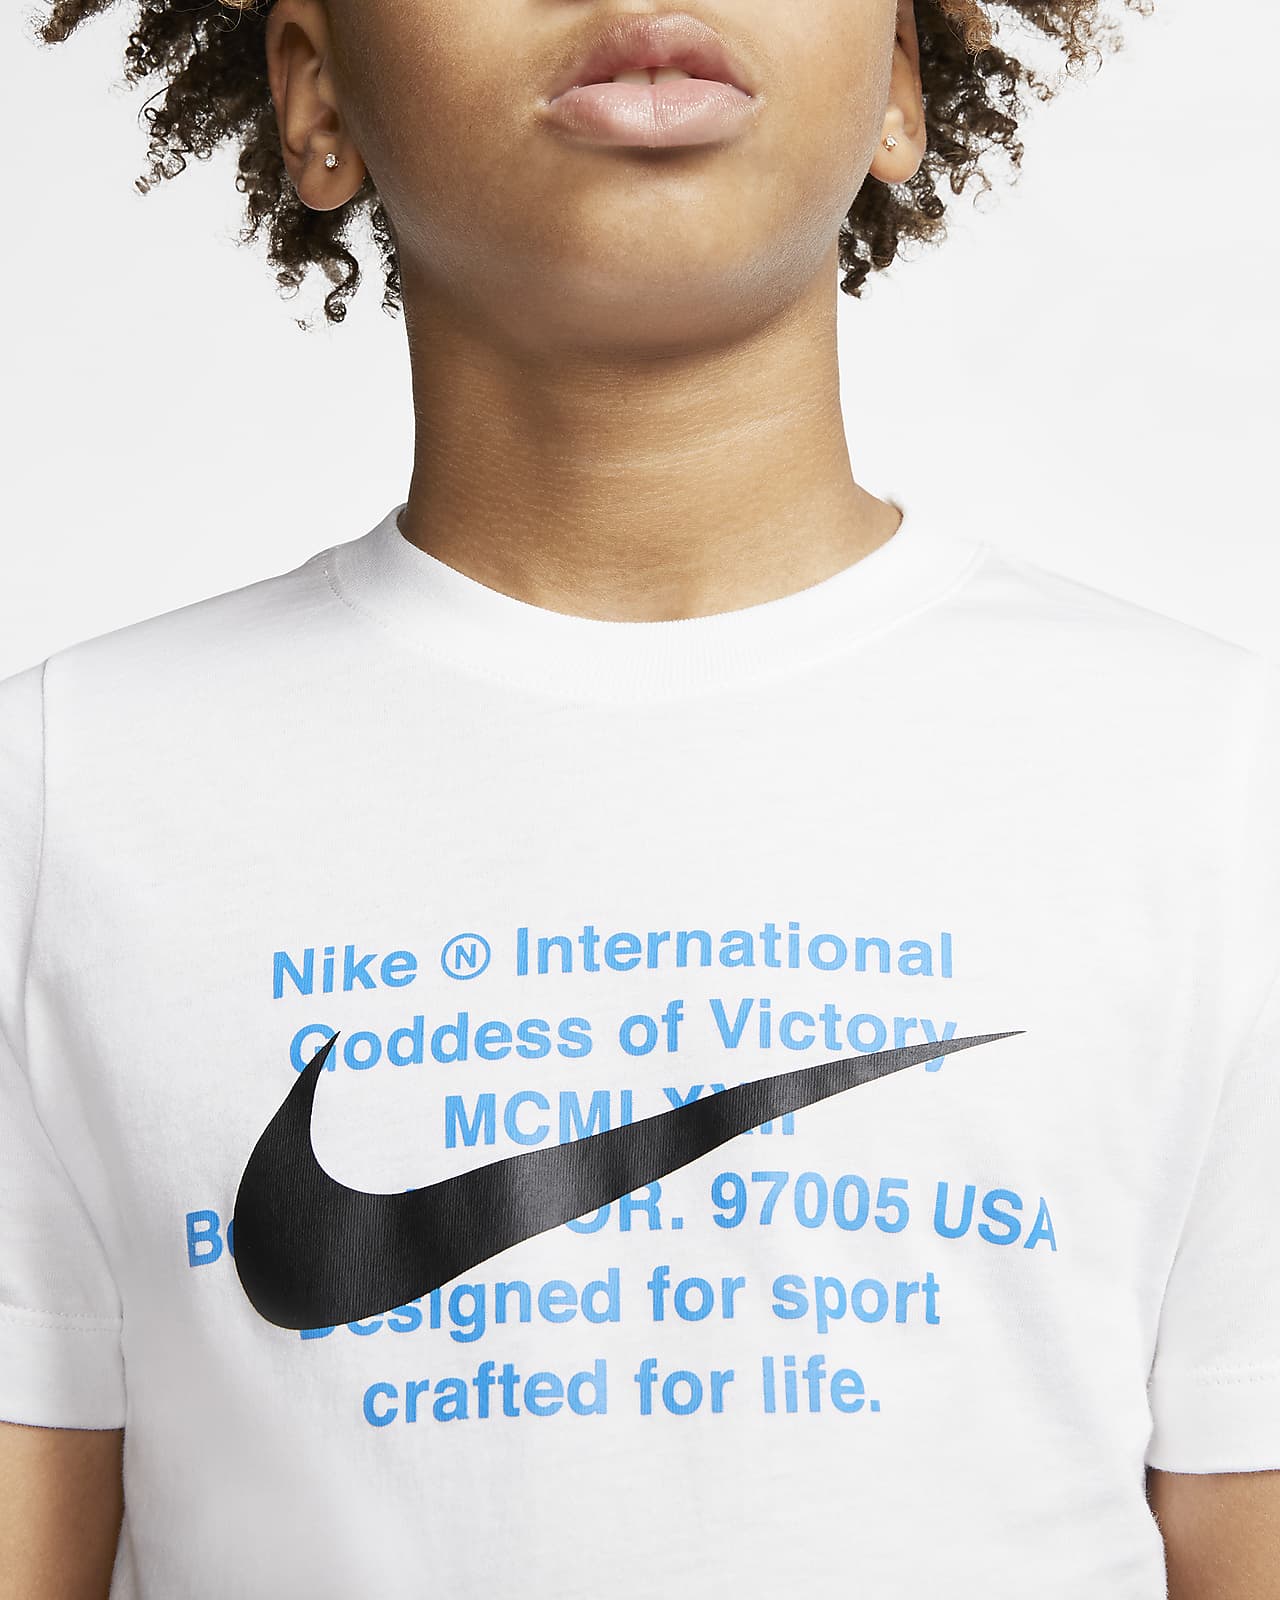 Футболка Nike International. Найк интернационал Goddess. Nike Sportswear футболка.